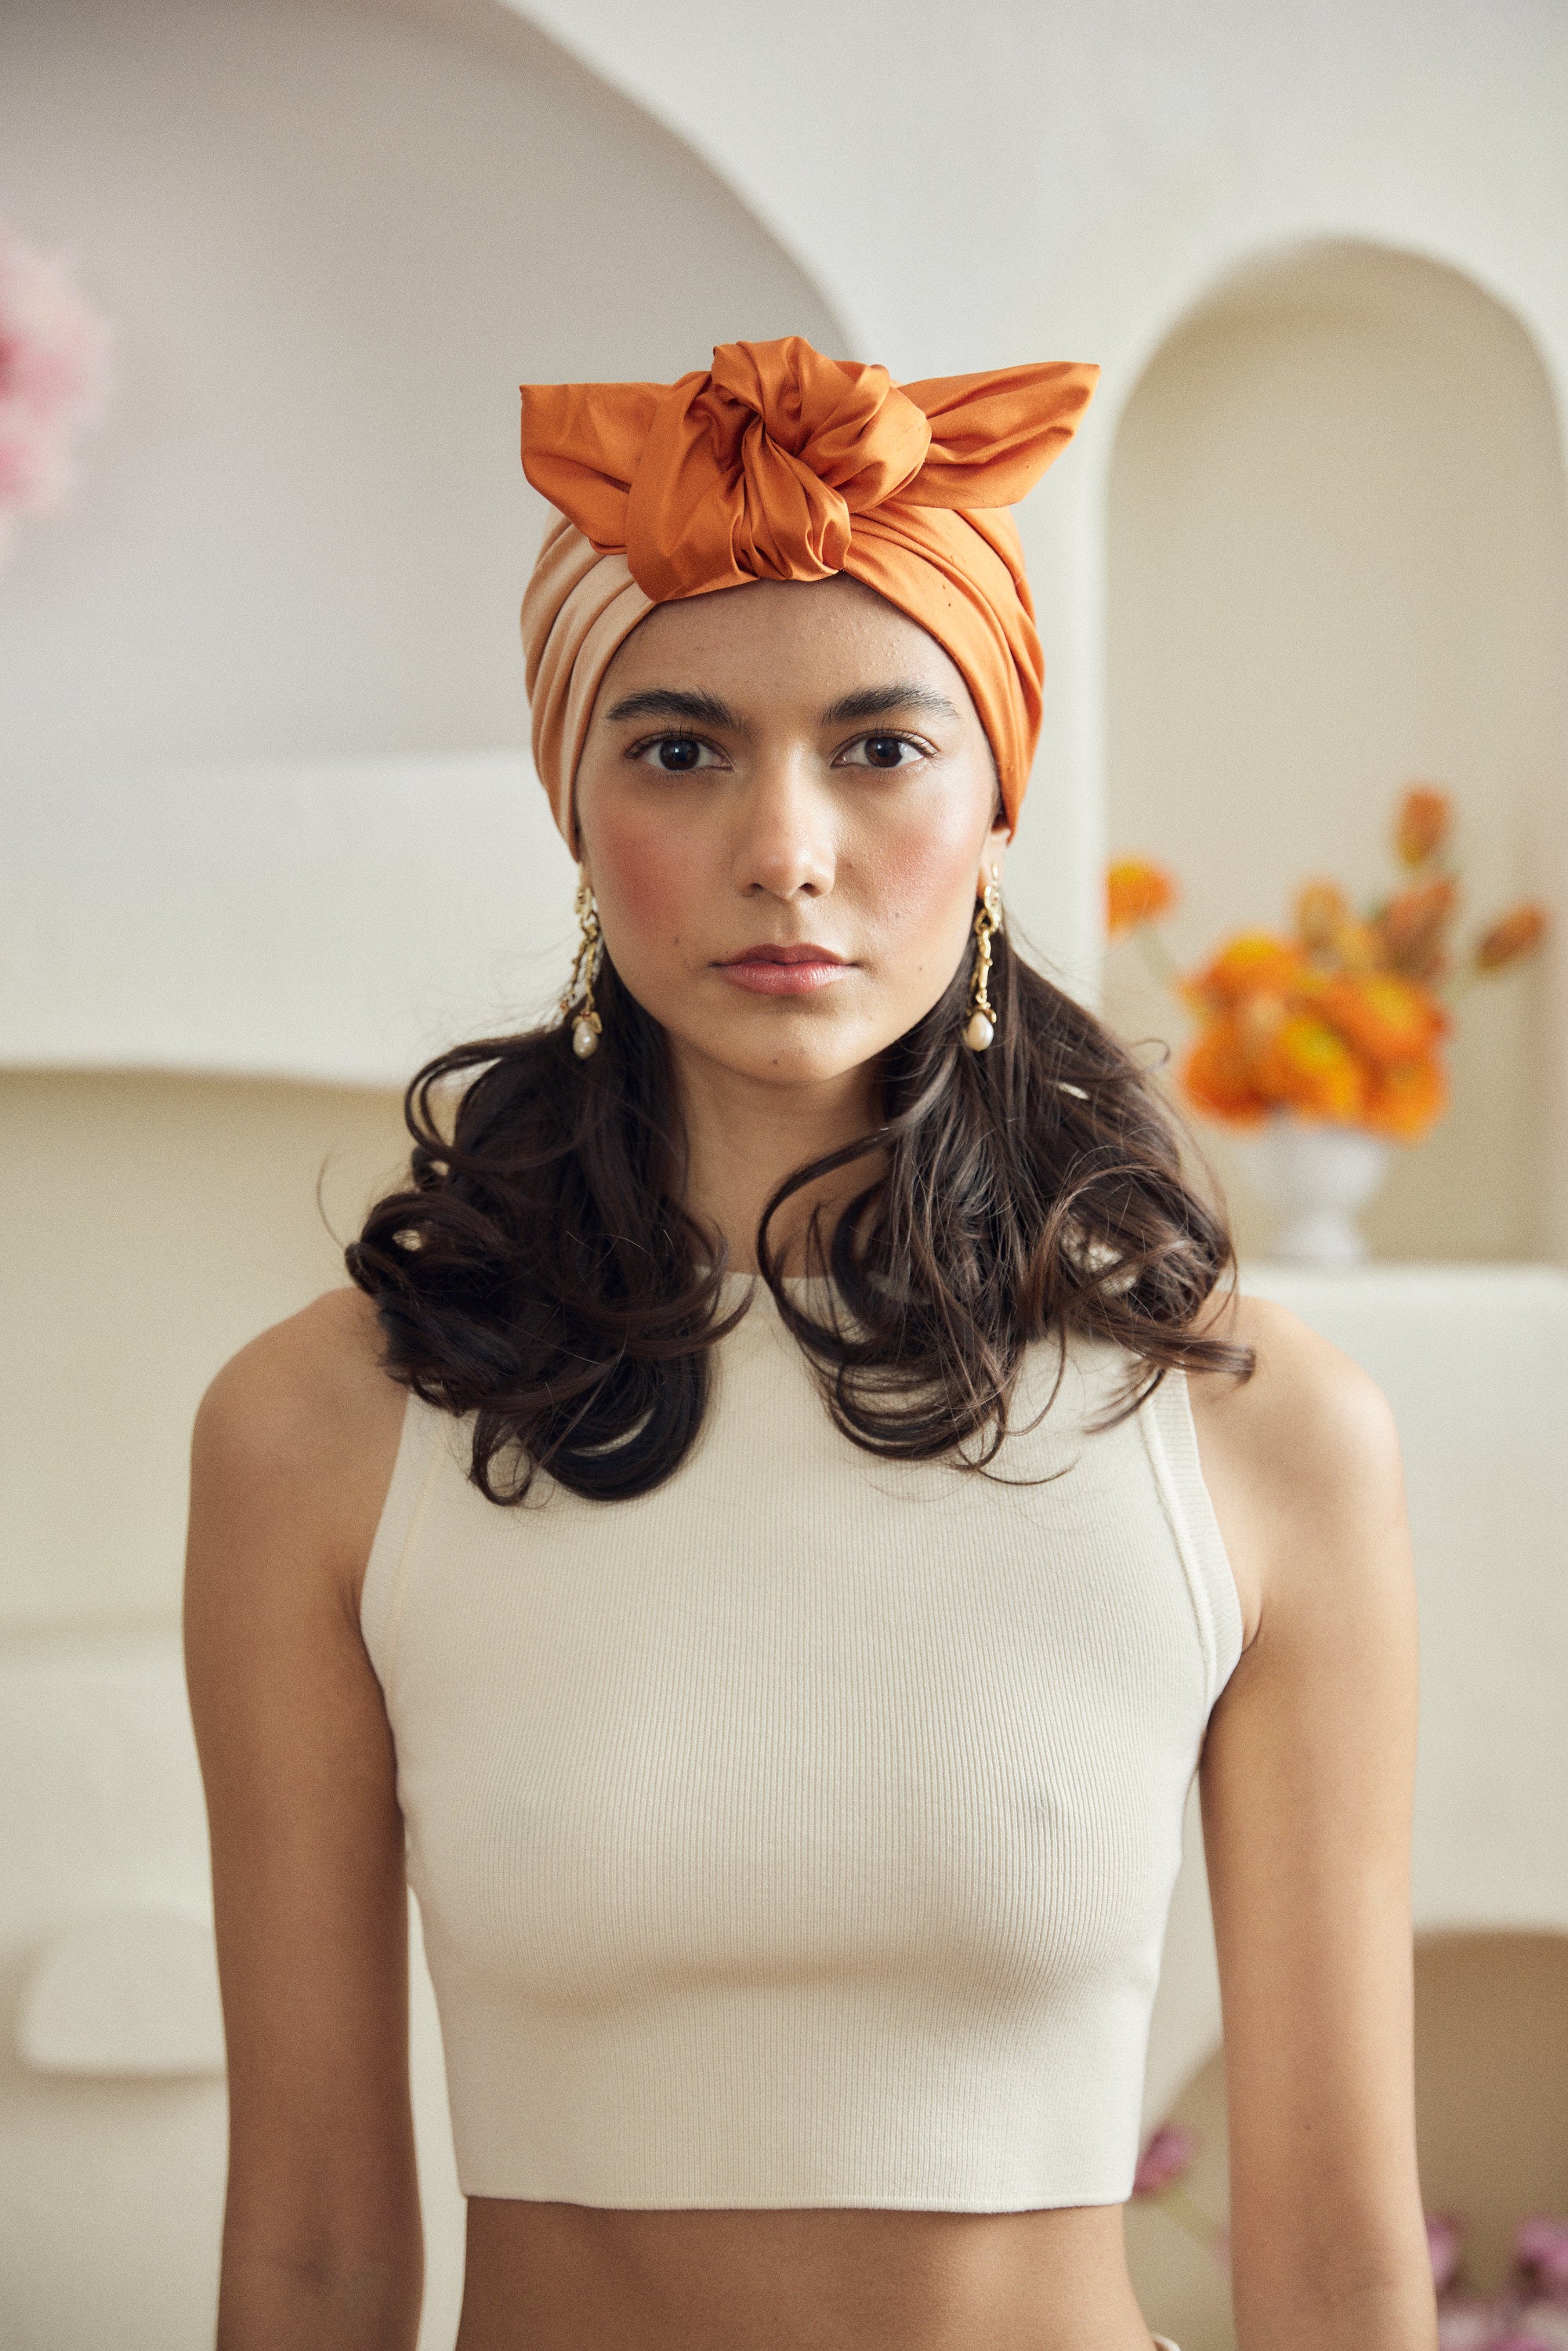 Parelli knotted turban hat - Orange shantung silk